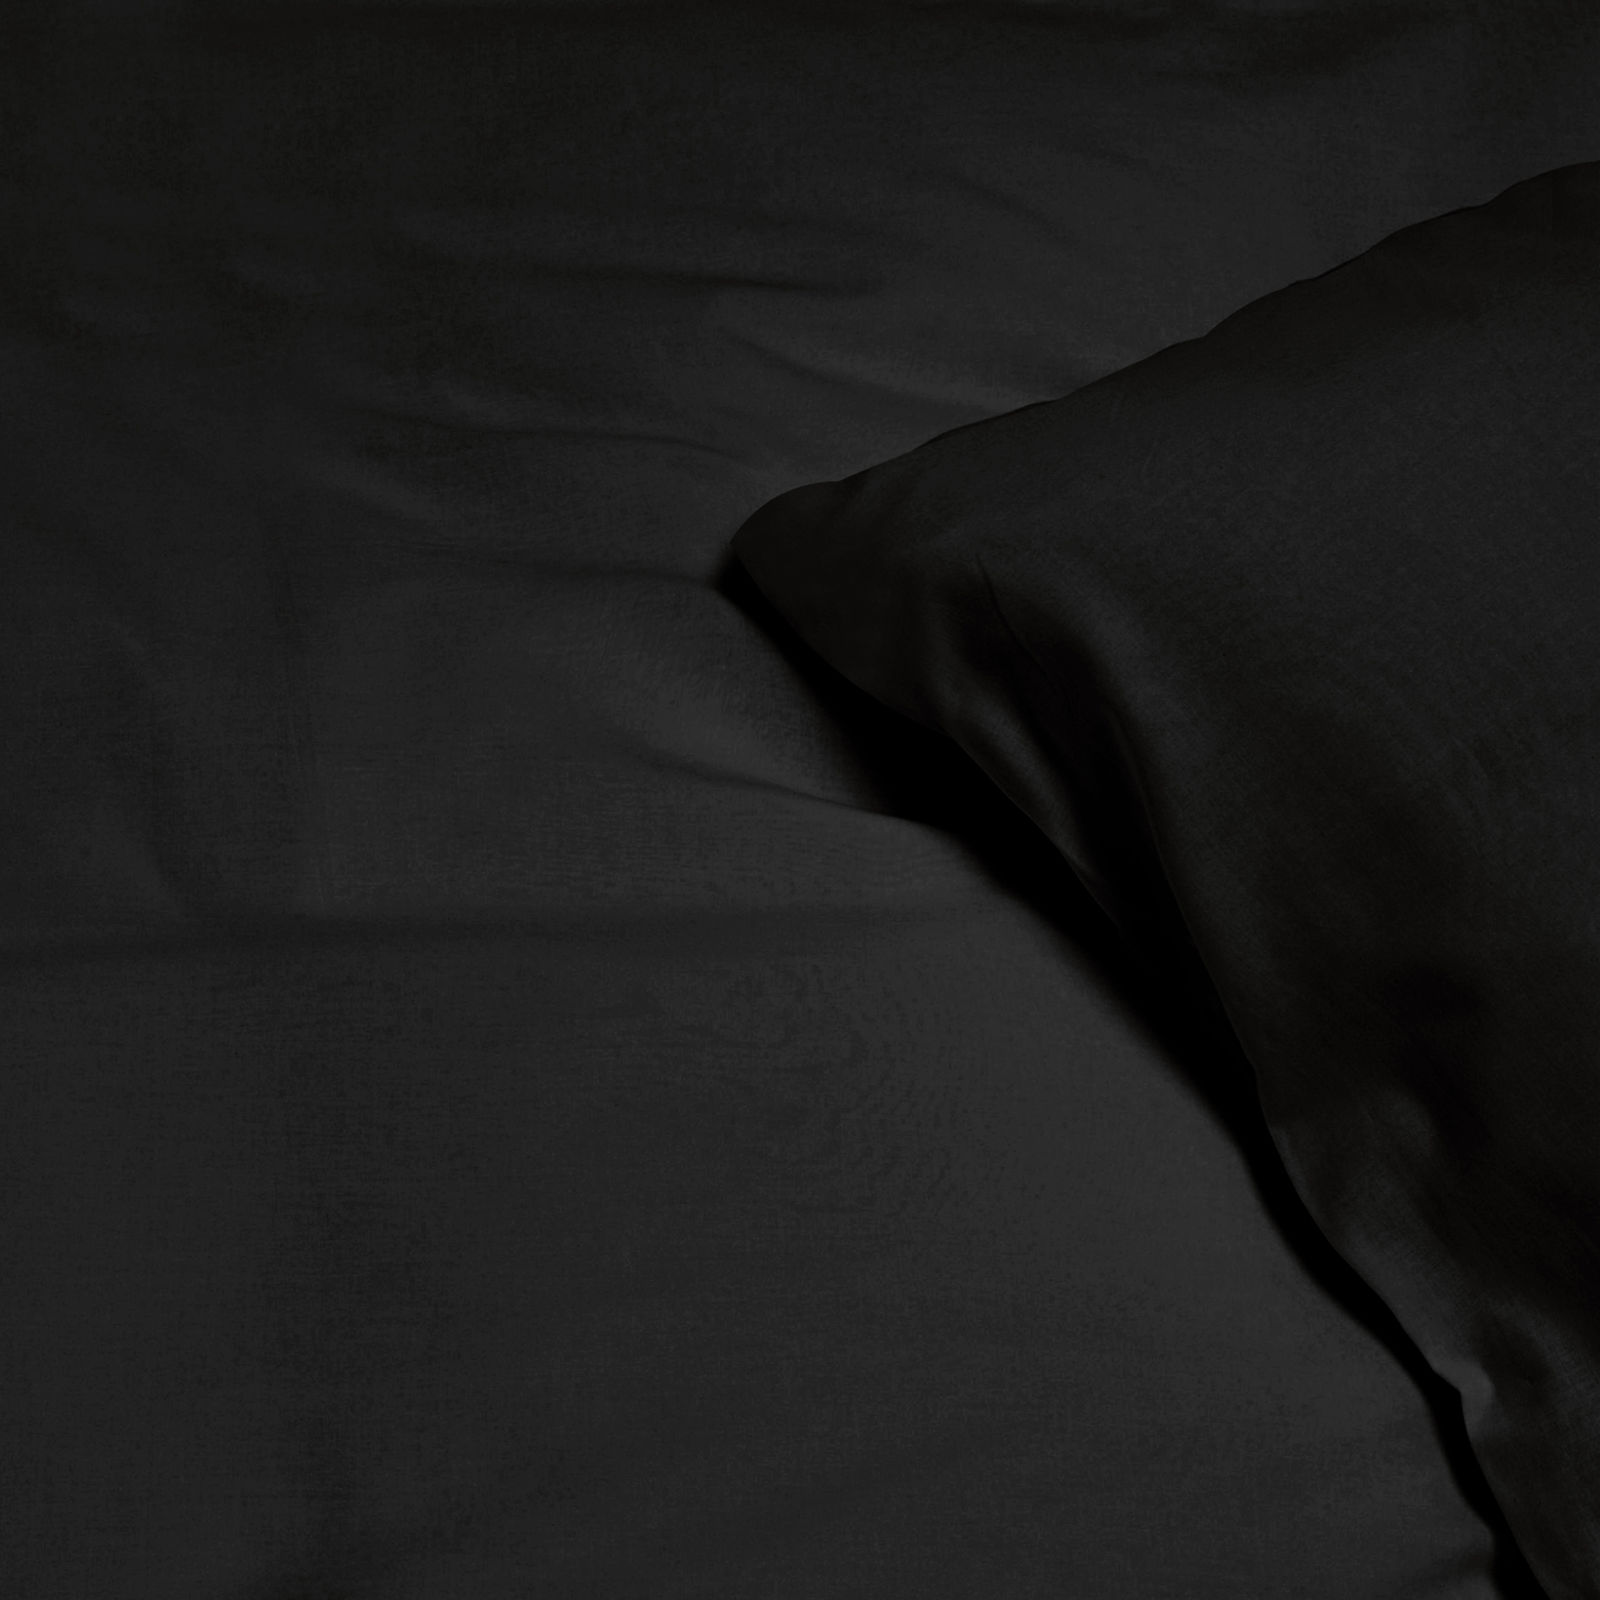 Lenjerie de pat din satin de lux - negru antracit